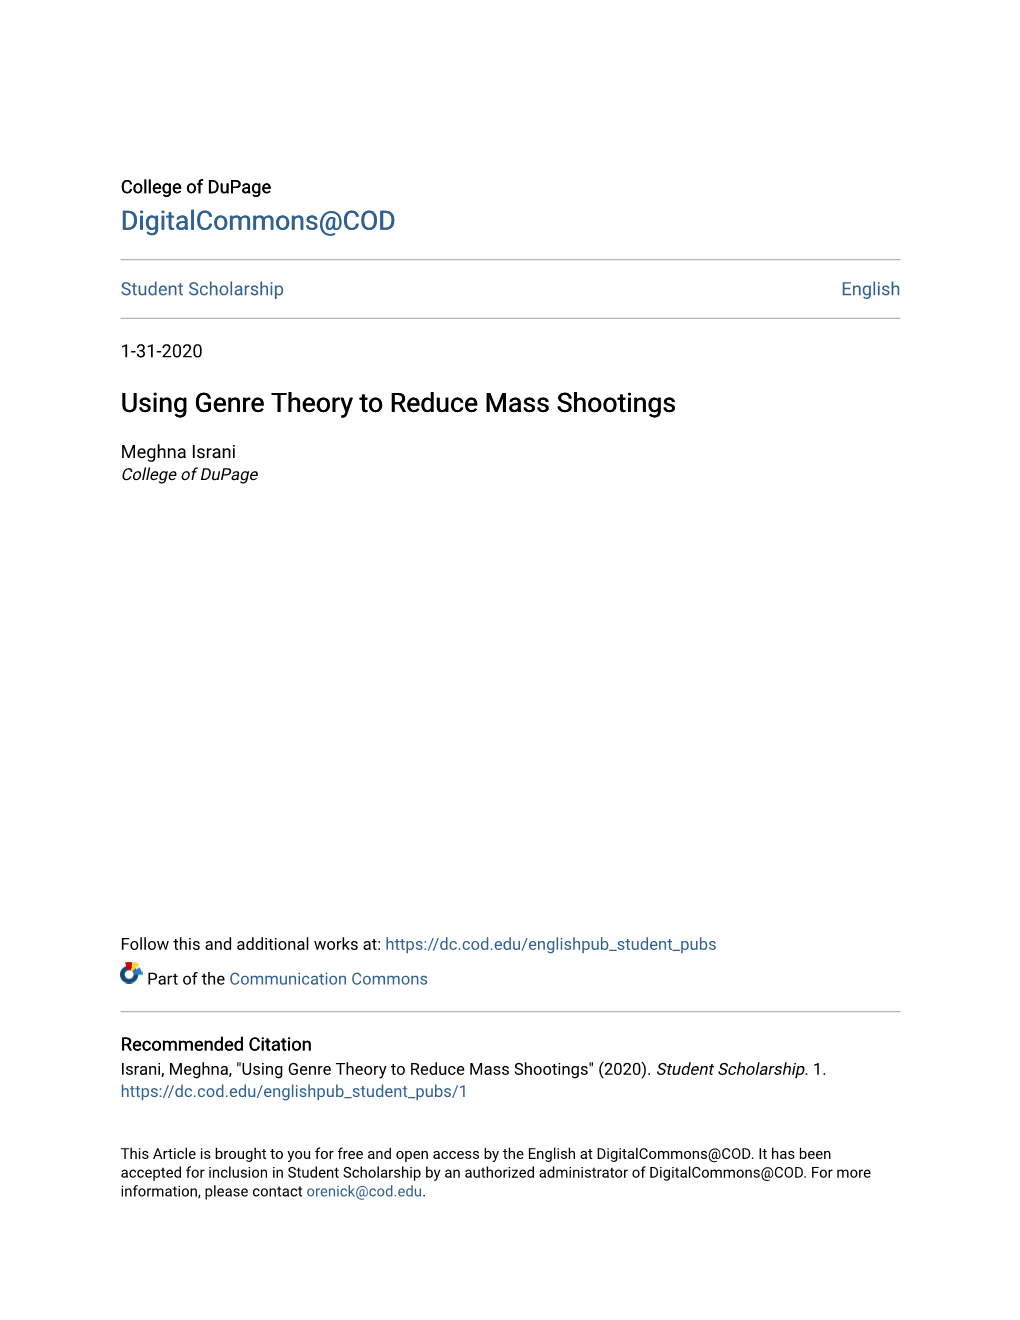 Using Genre Theory to Reduce Mass Shootings